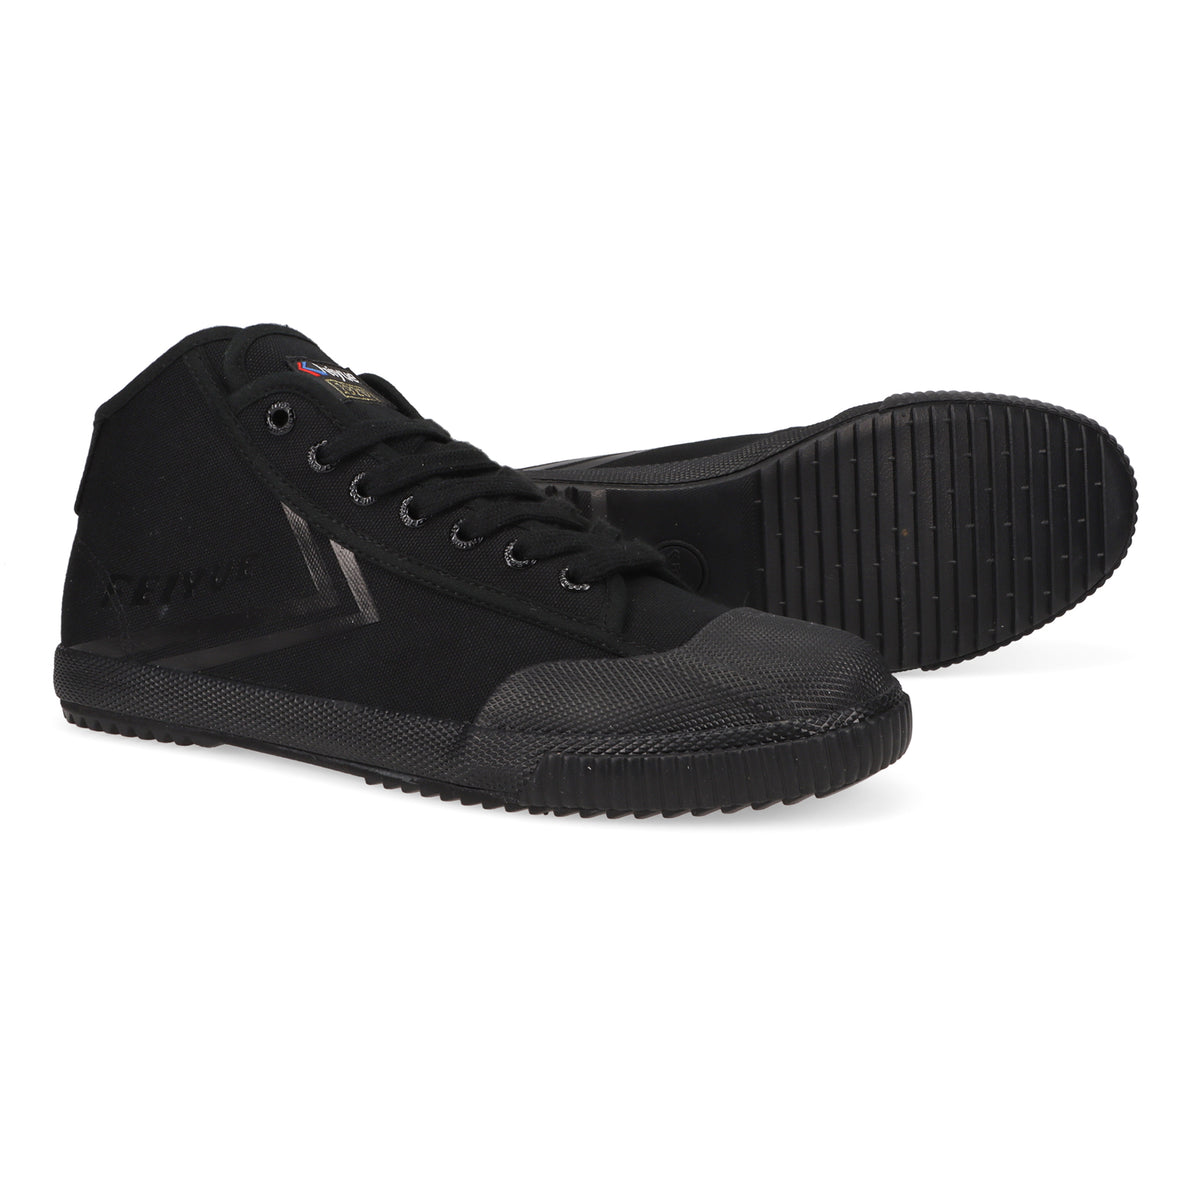 Feiyue Martial Arts Shoes Black - Black 42 = 9